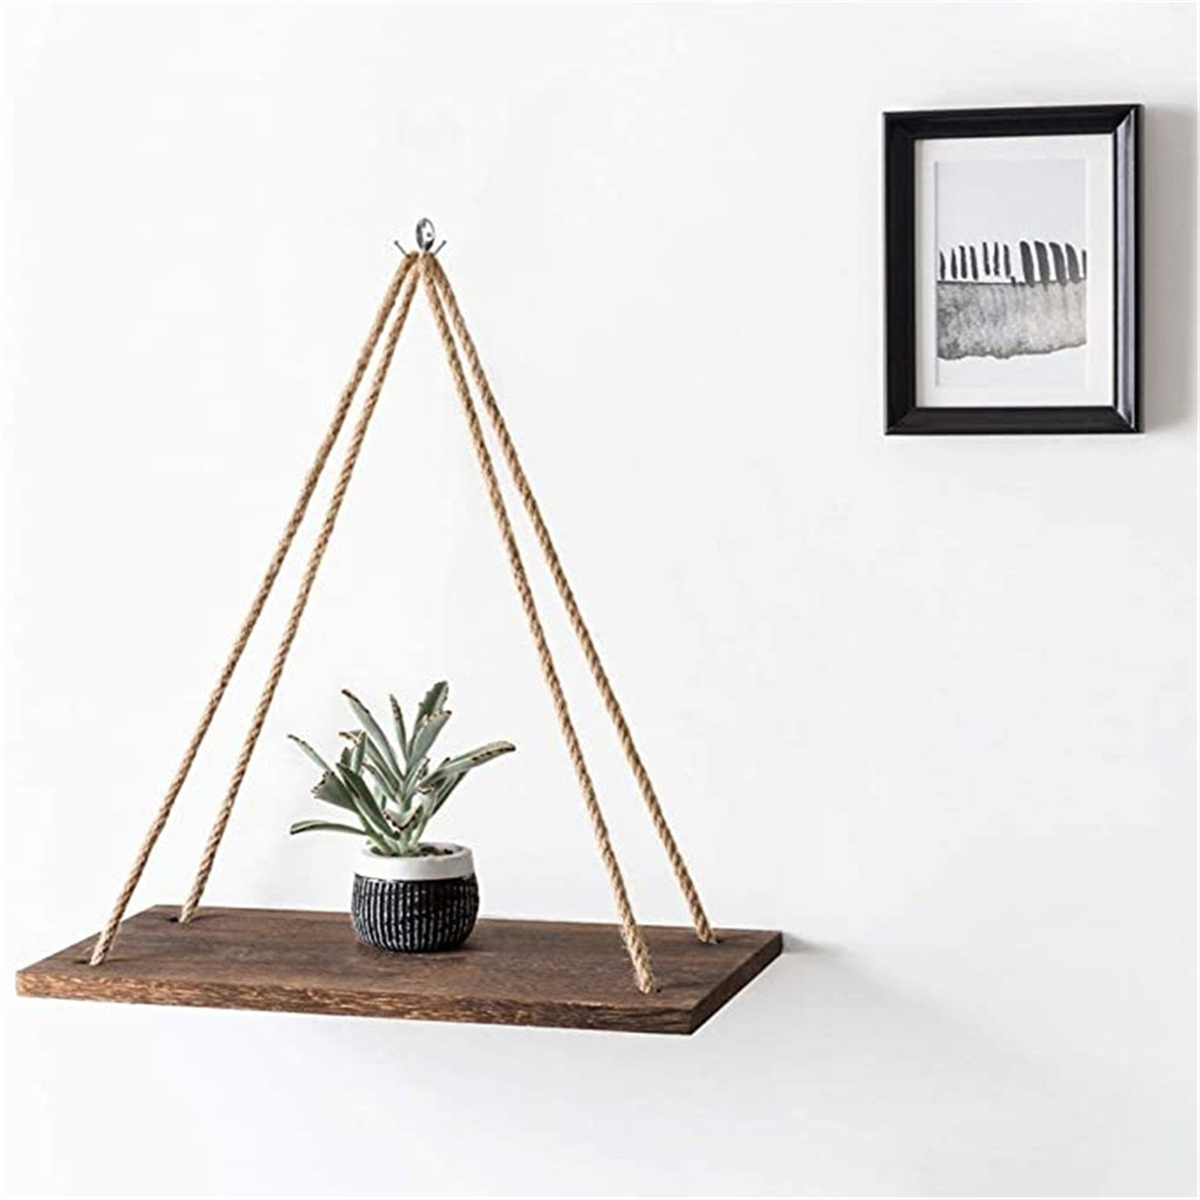 Wooden-Hanging-Shelf-Swing-Floating-Shelves-Rope-Wall-Display-Rack-Decorate-1828914-5